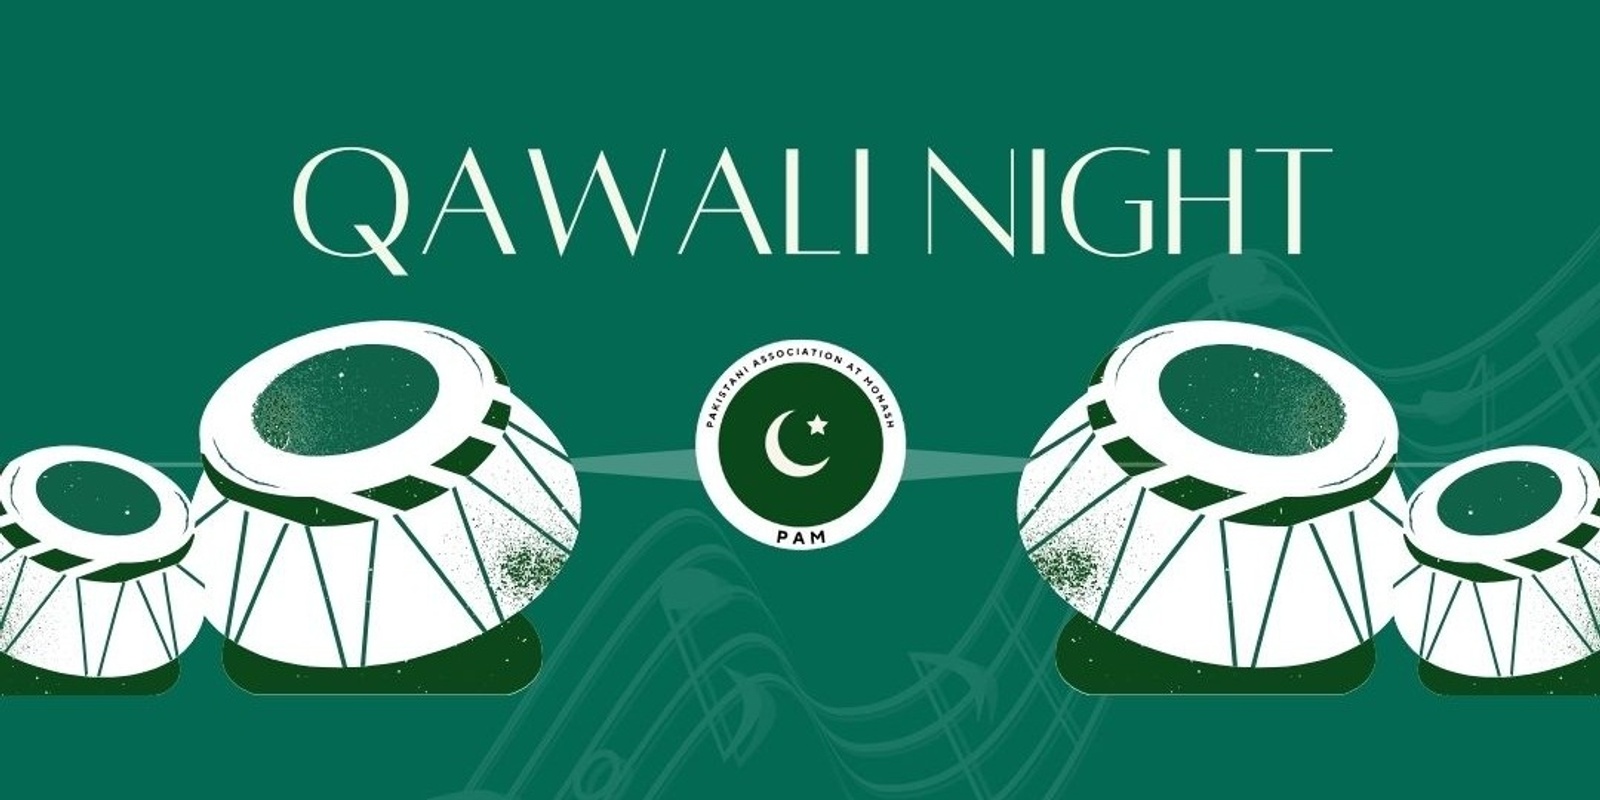 Banner image for Grand Qawali Night